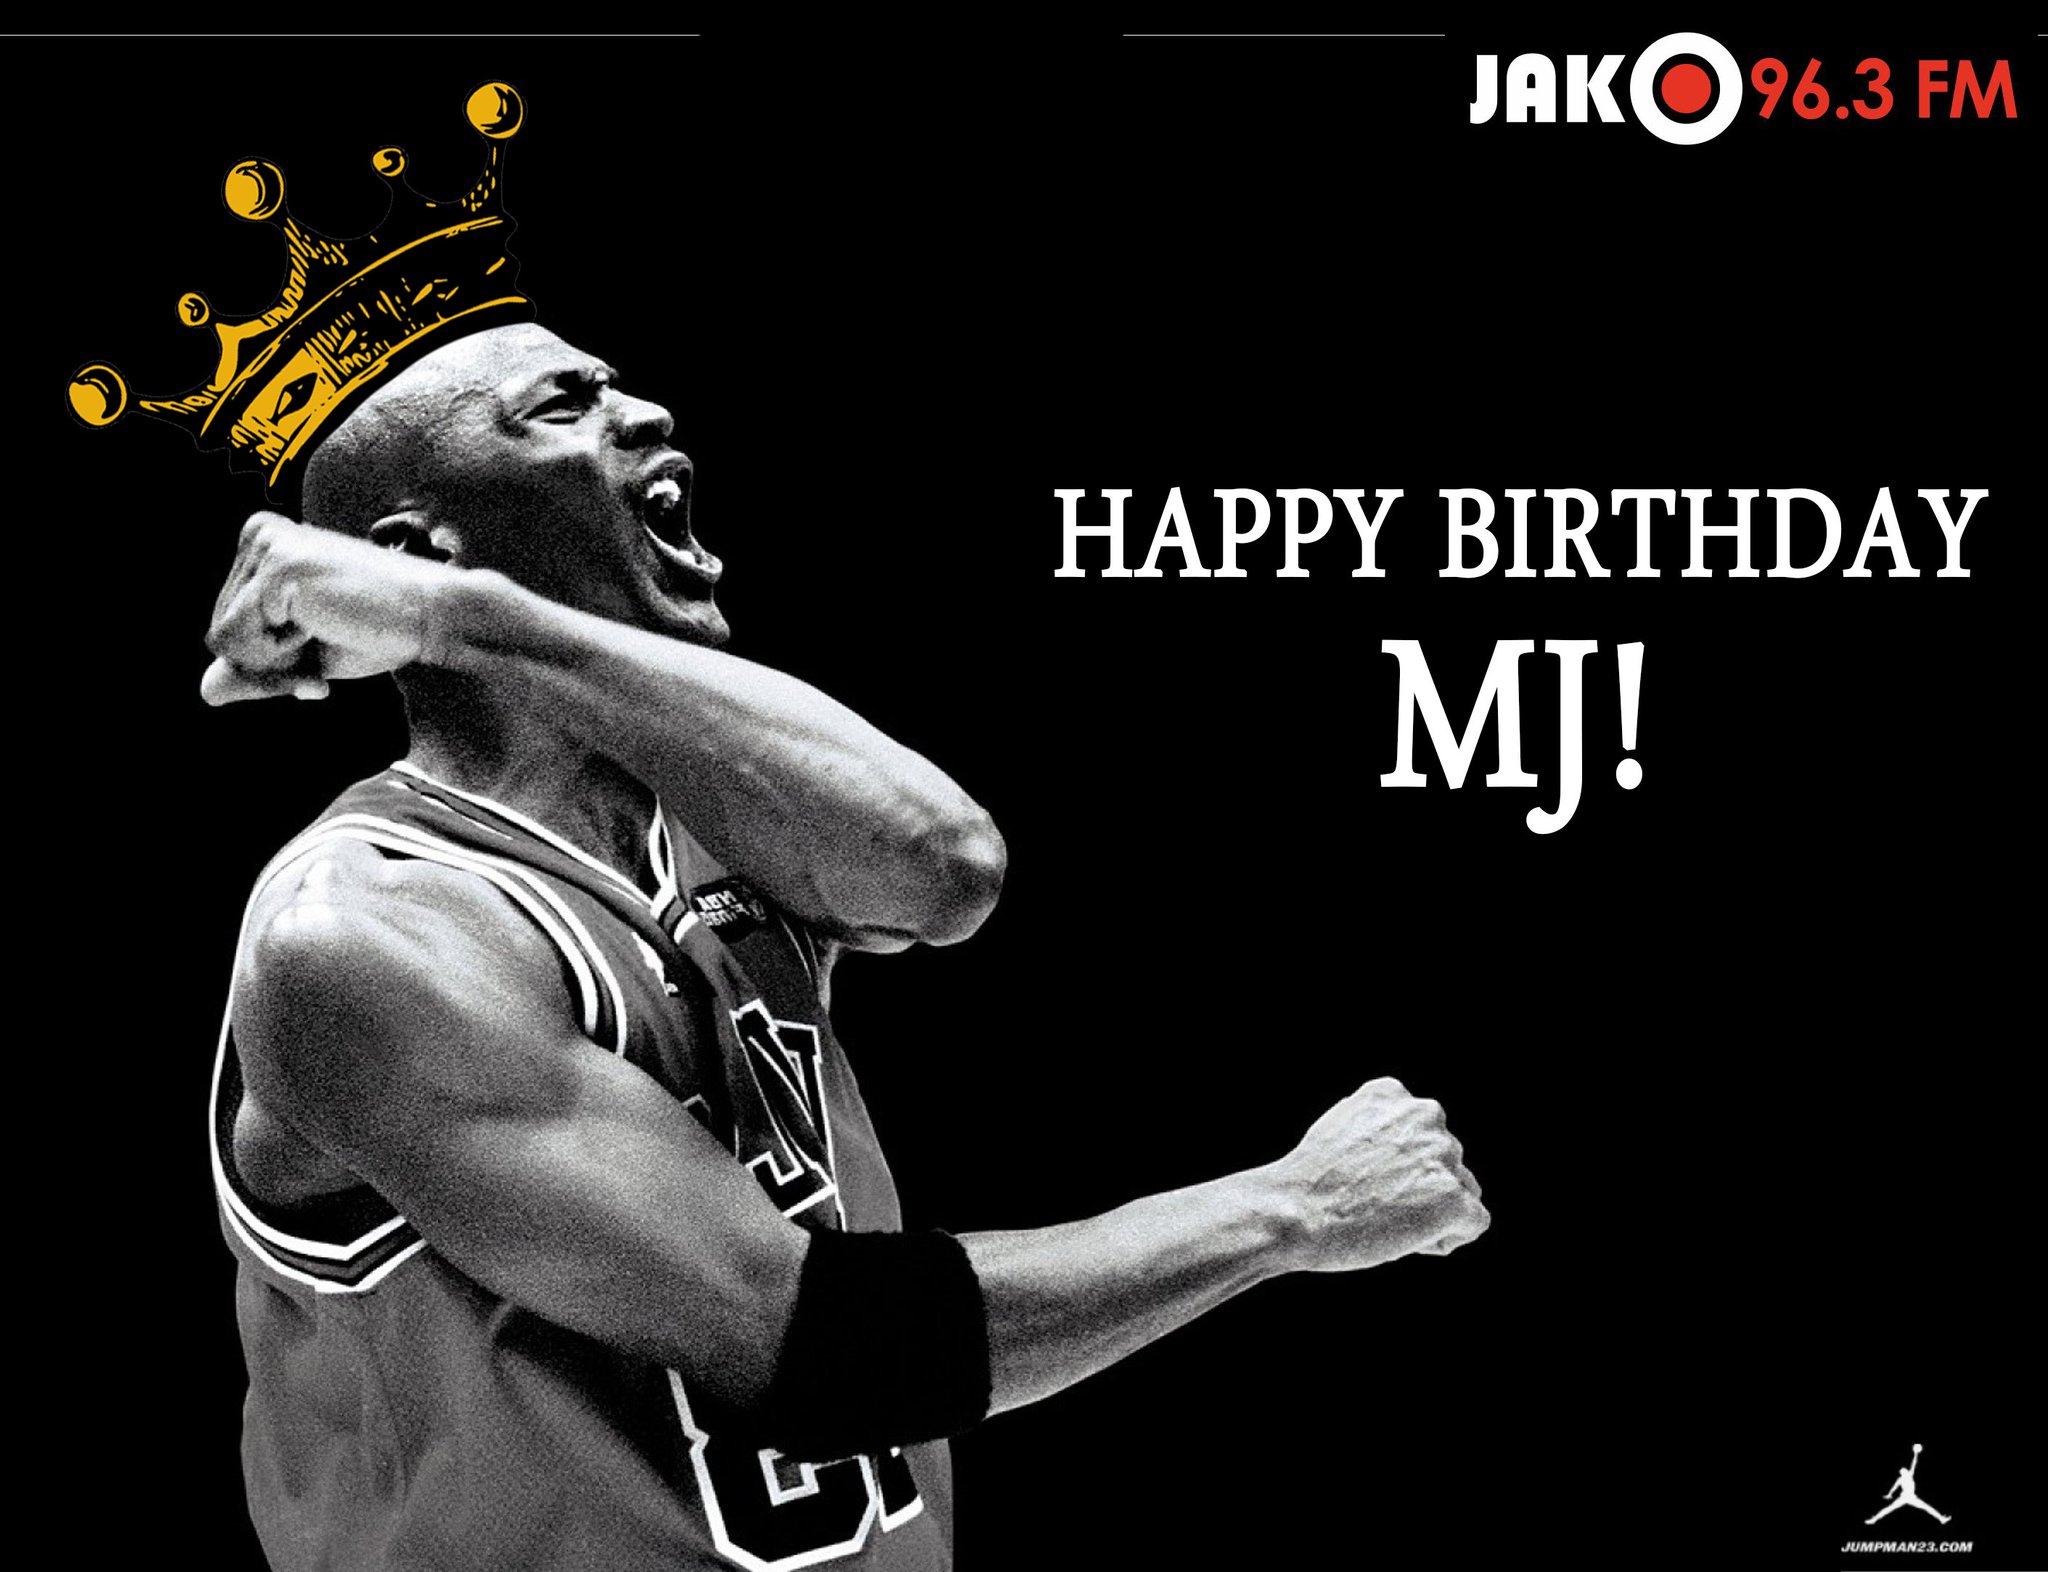 JAKO FM would like to wish legendary basketball player Michael Jordan a very happy birthday! 